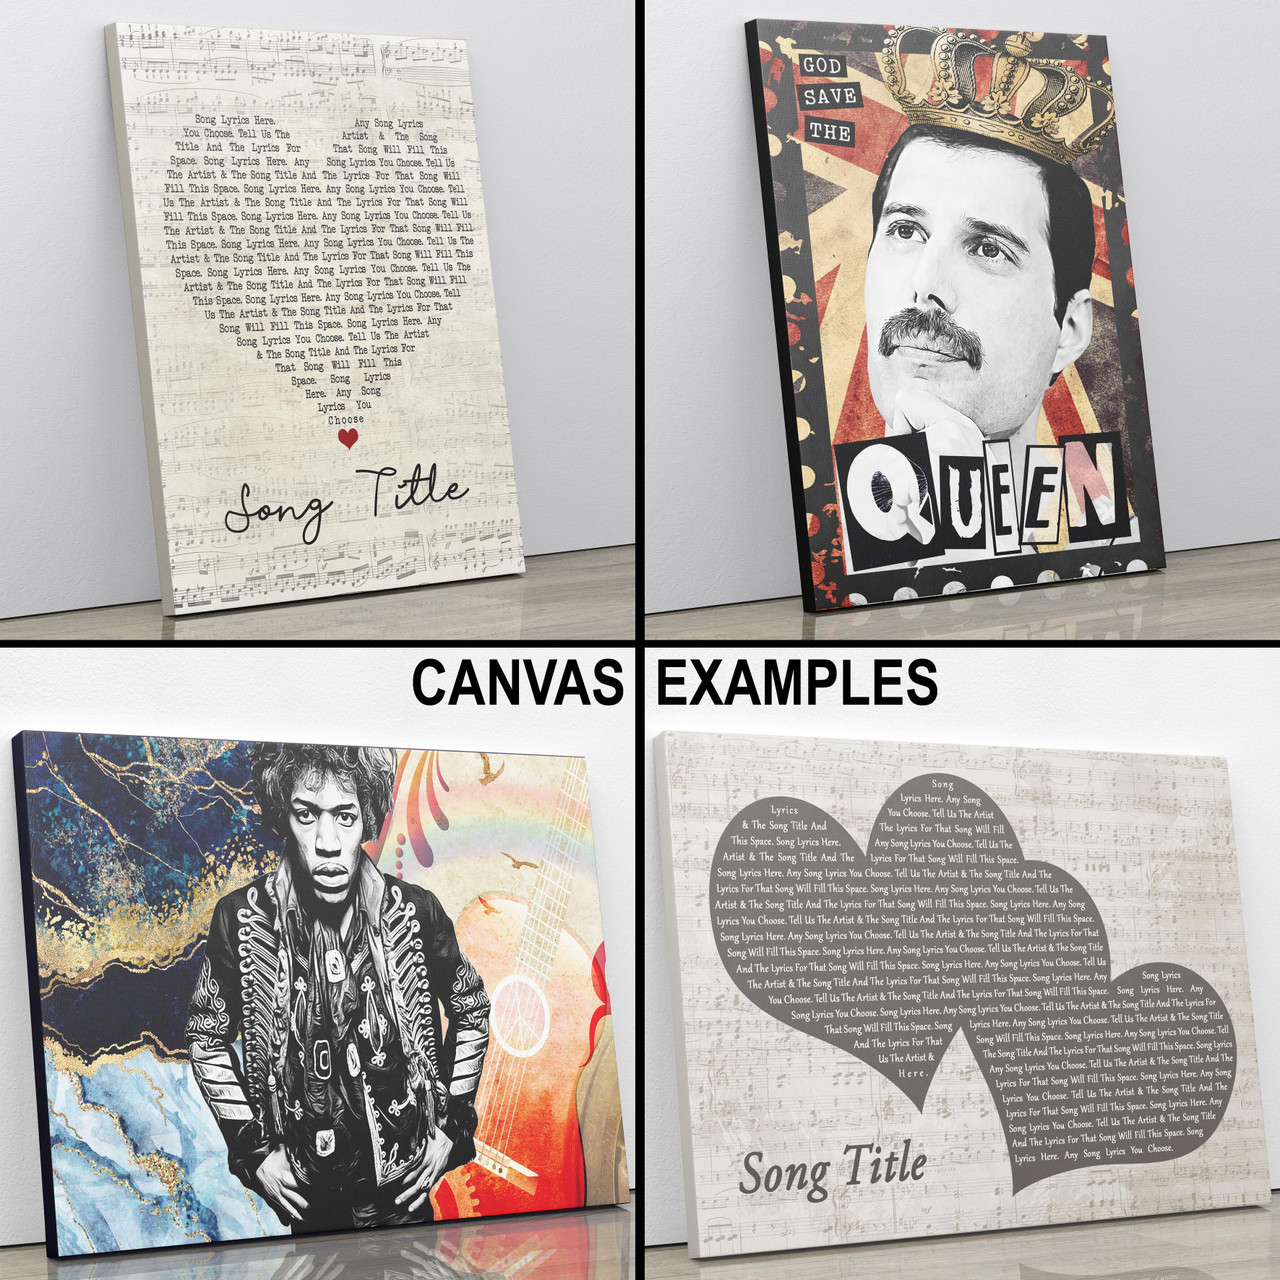 Johnny Cash RING OF FIRE Song Lyrics Poster Print Wall Art | eBay